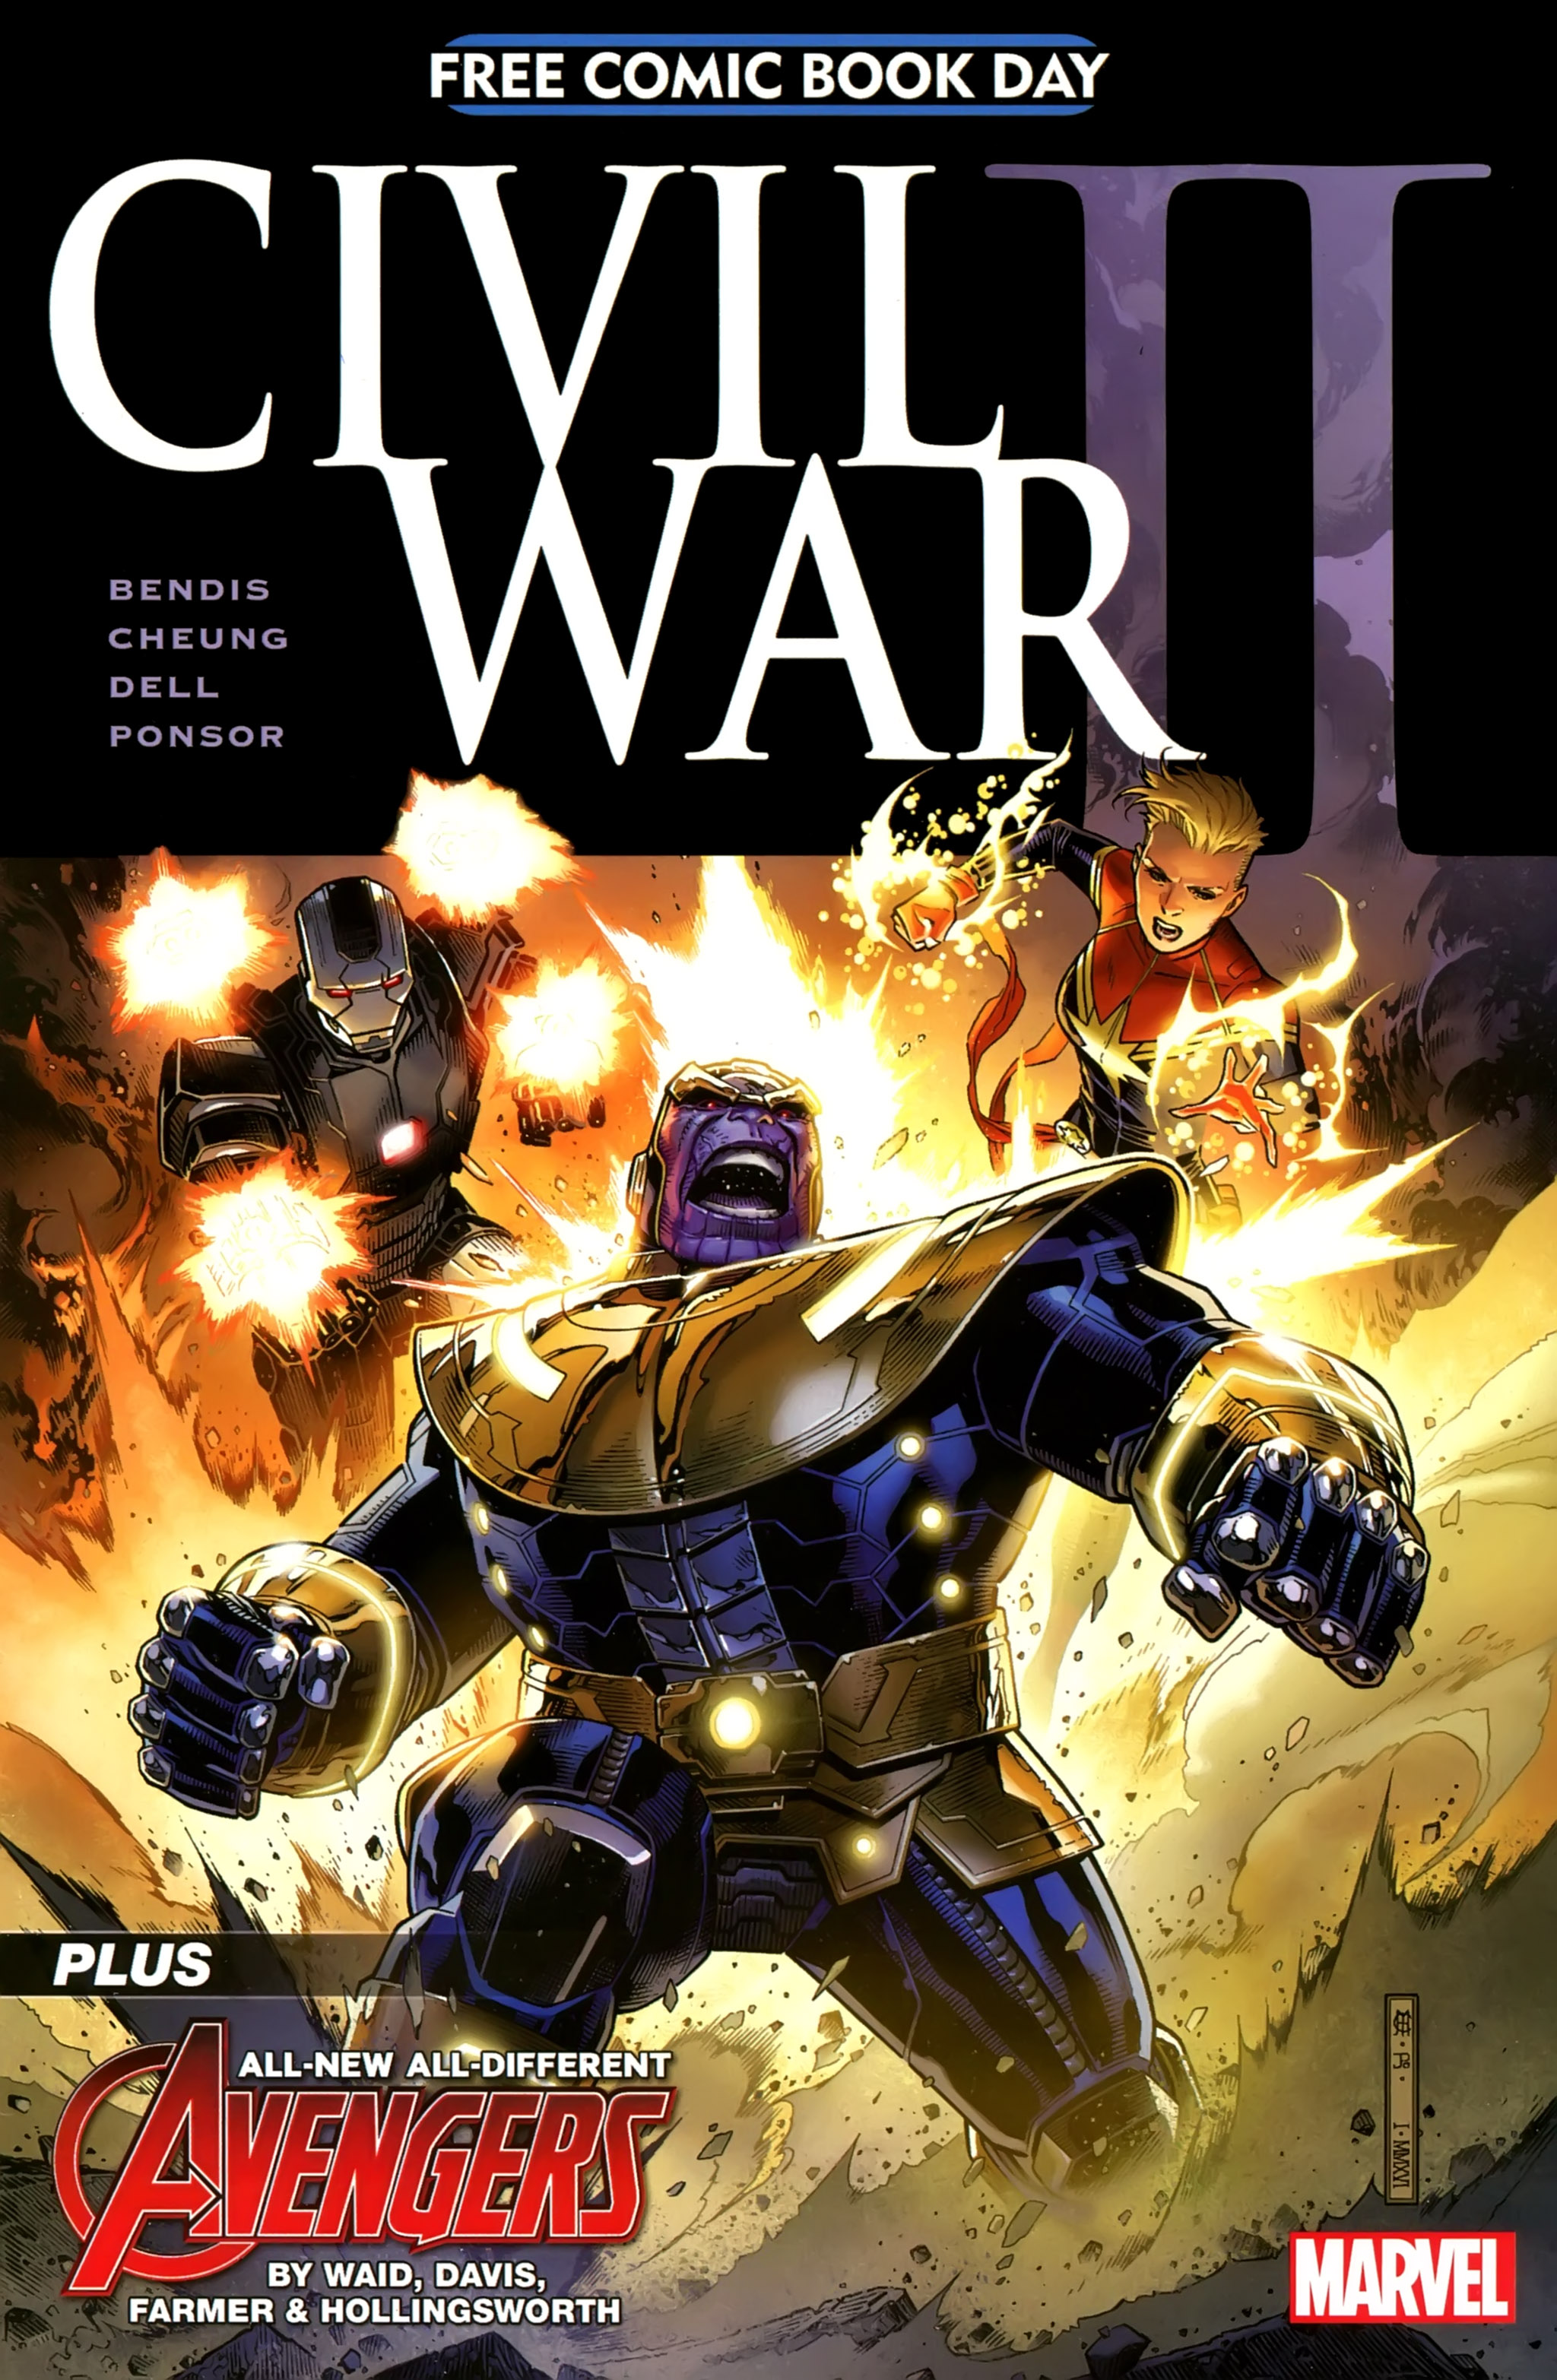 Read online Free Comic Book Day 2016 comic -  Issue # Civil War II - 1